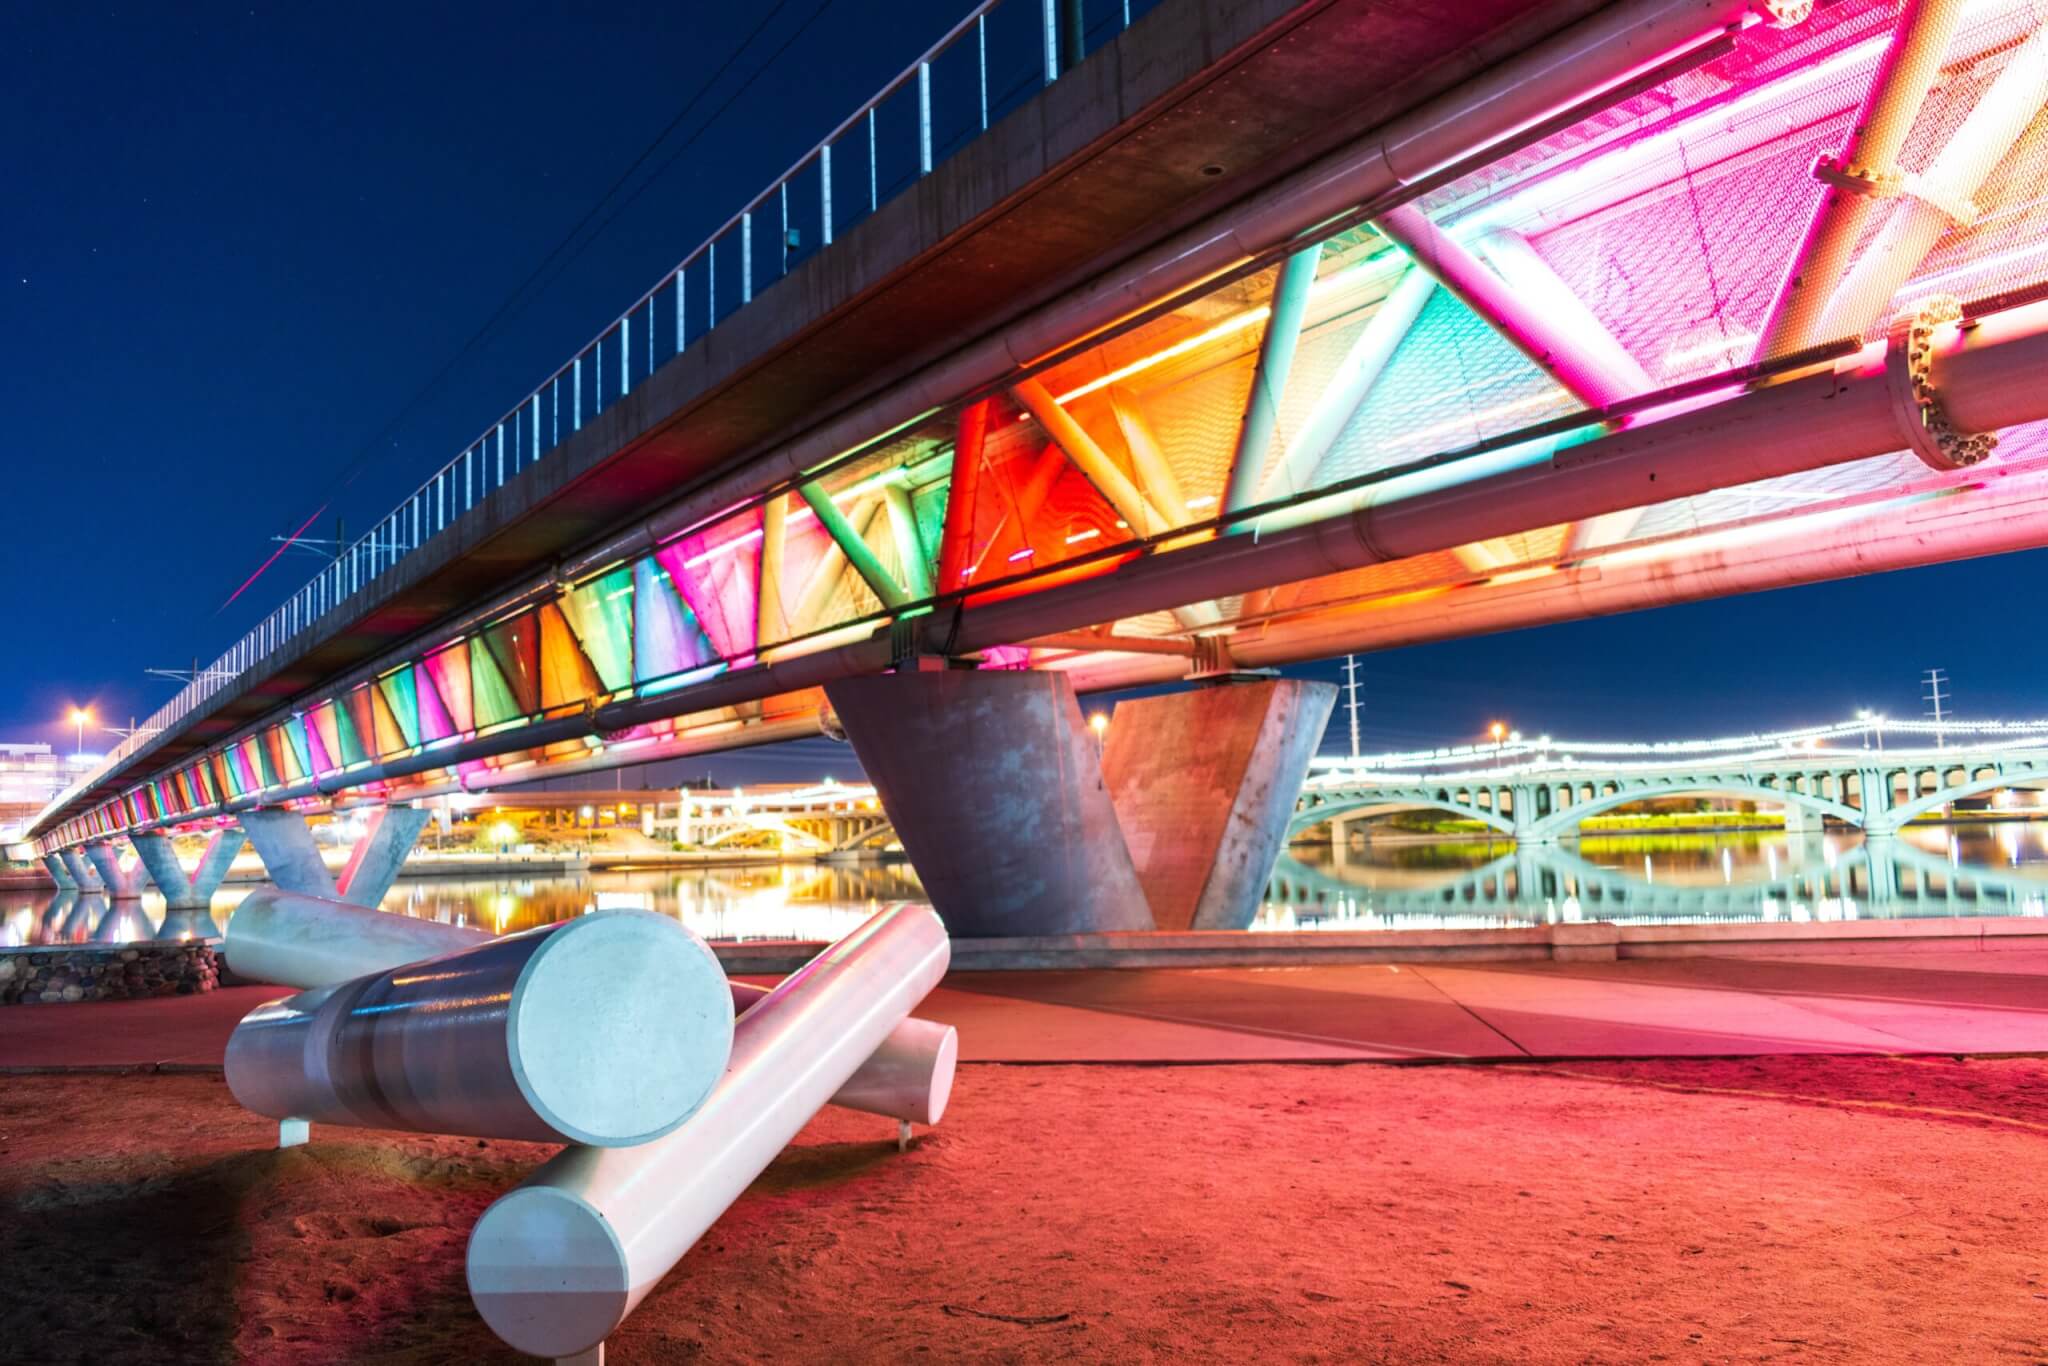 colorful bridge